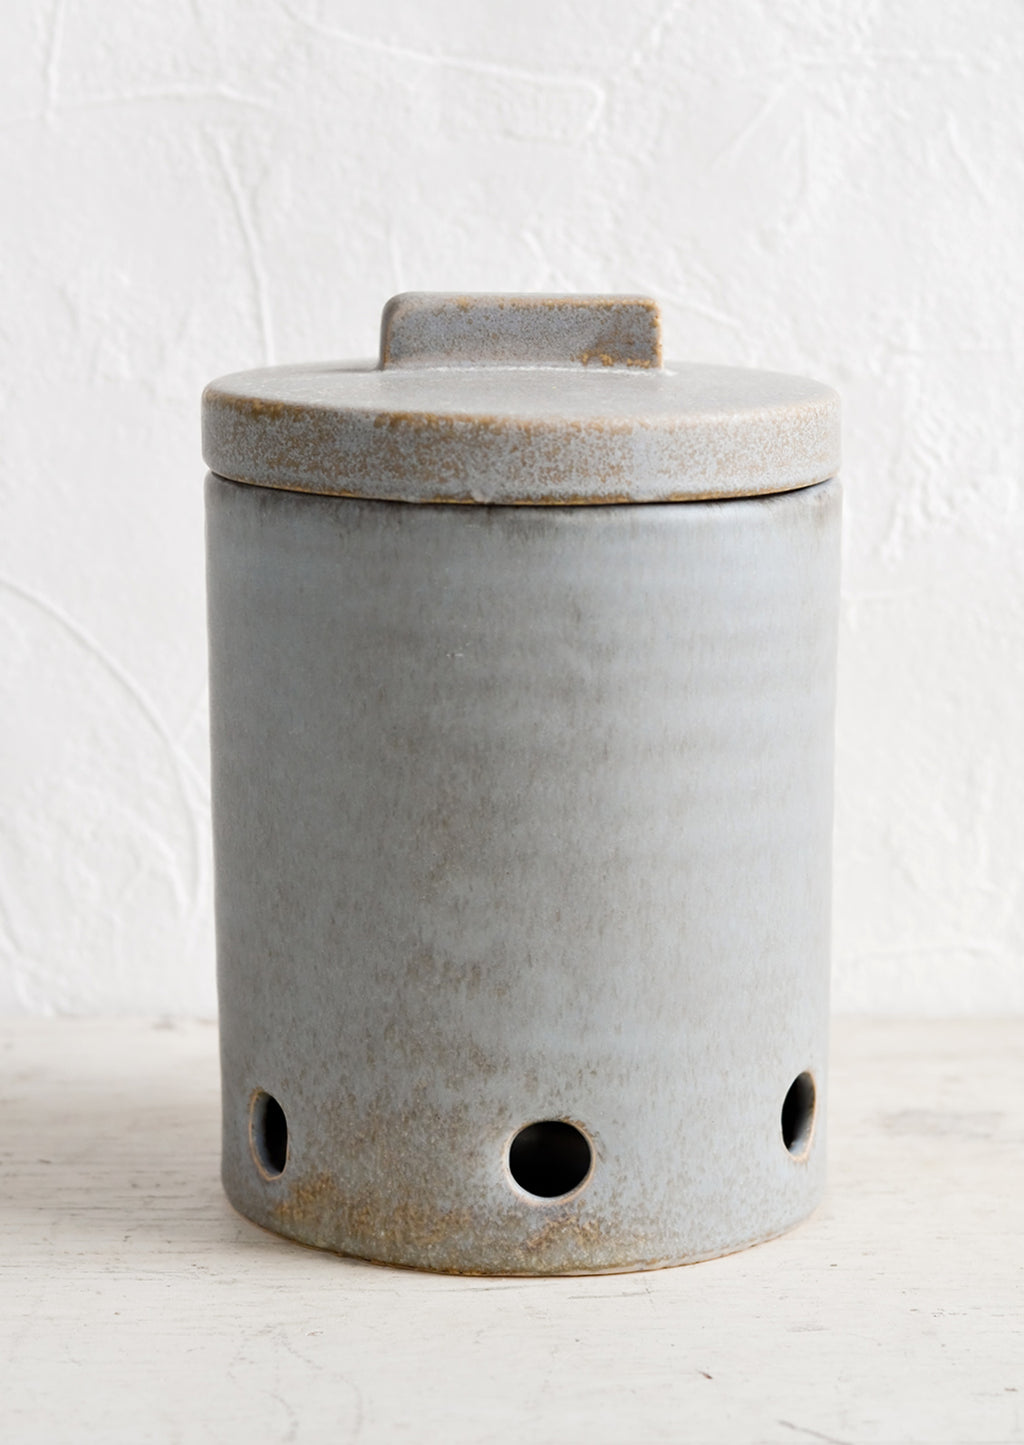 2: A large ceramic kitchen storage jar intended for onion storage.